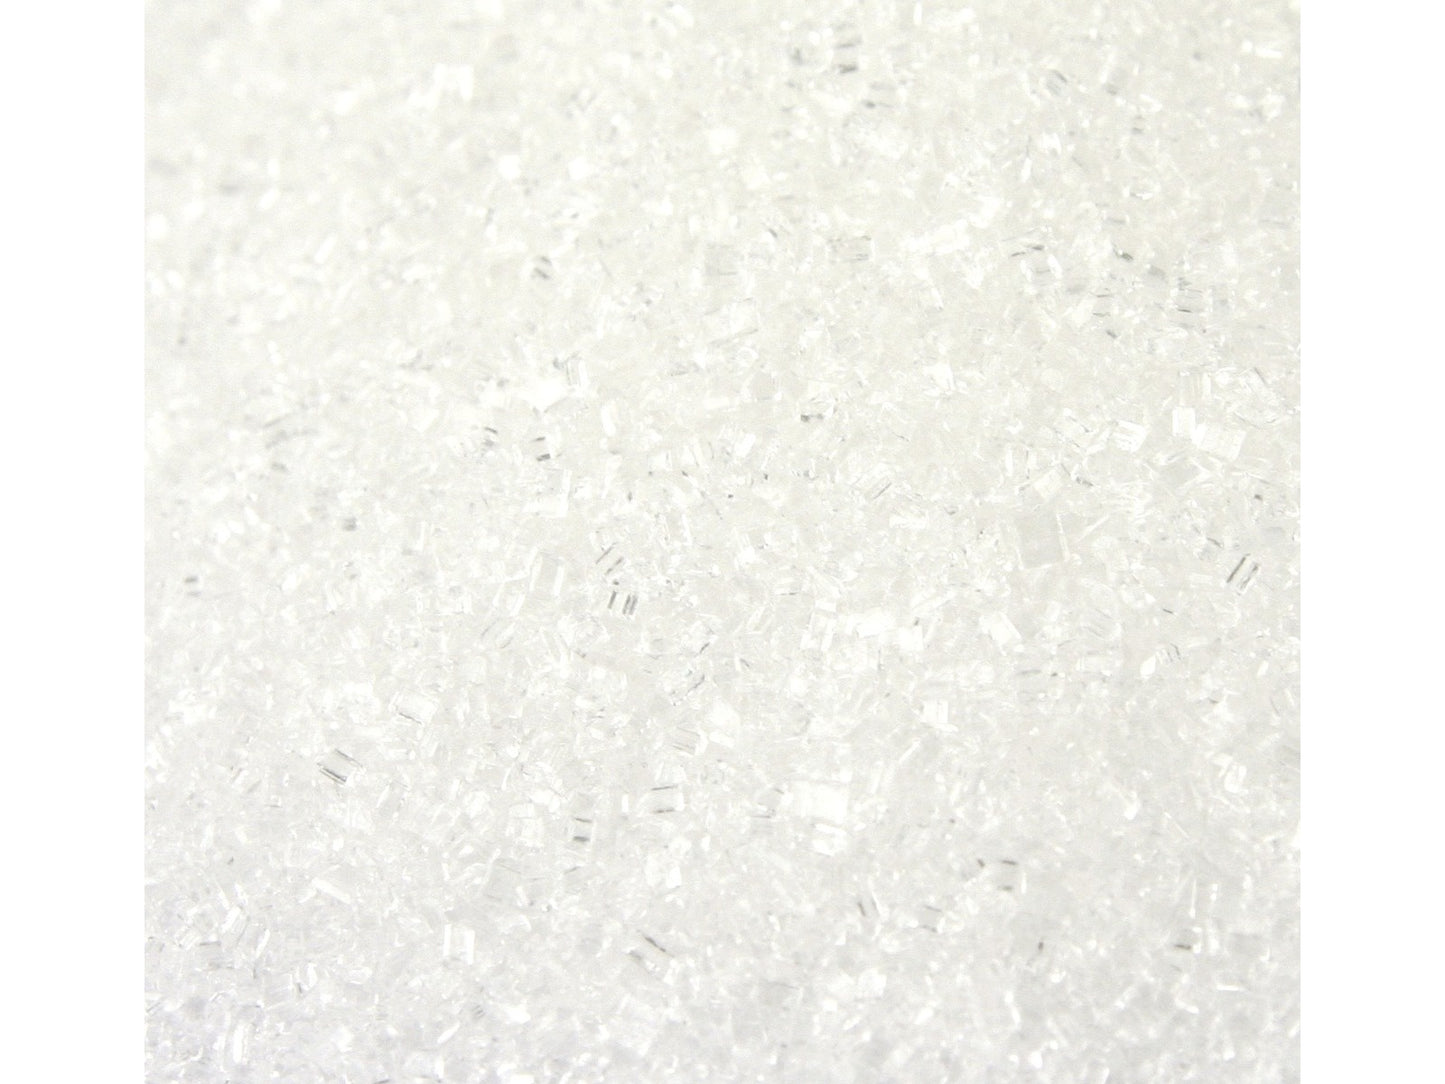 White Sanding Sugar - 4oz